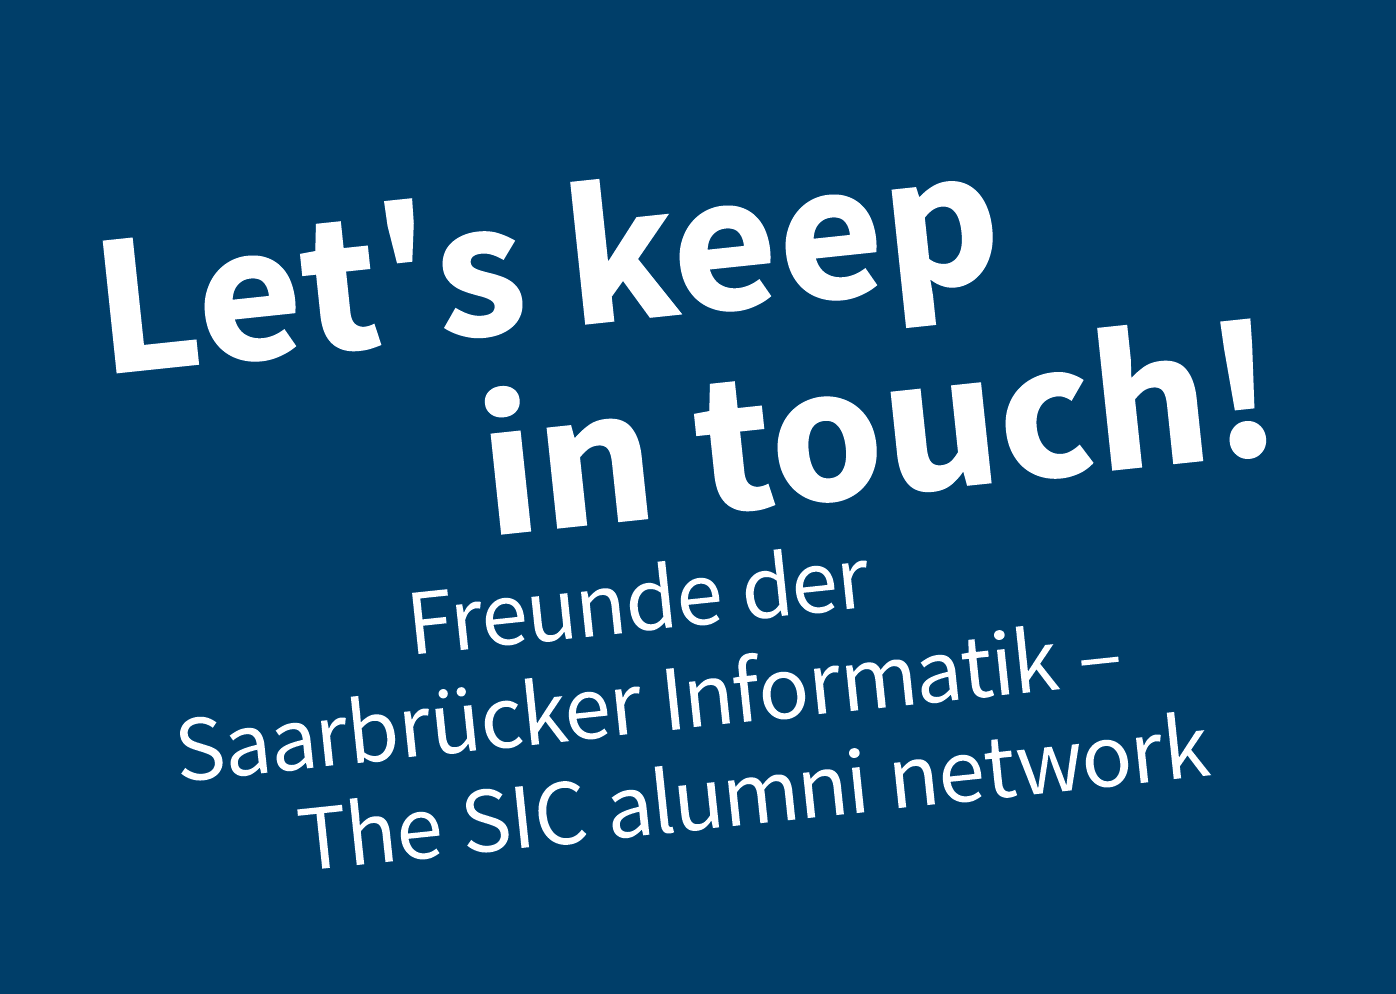 Schriftzug: "Let's keep in touch! Freunde der Saarbrücker Informatik - The SIC alumni network"